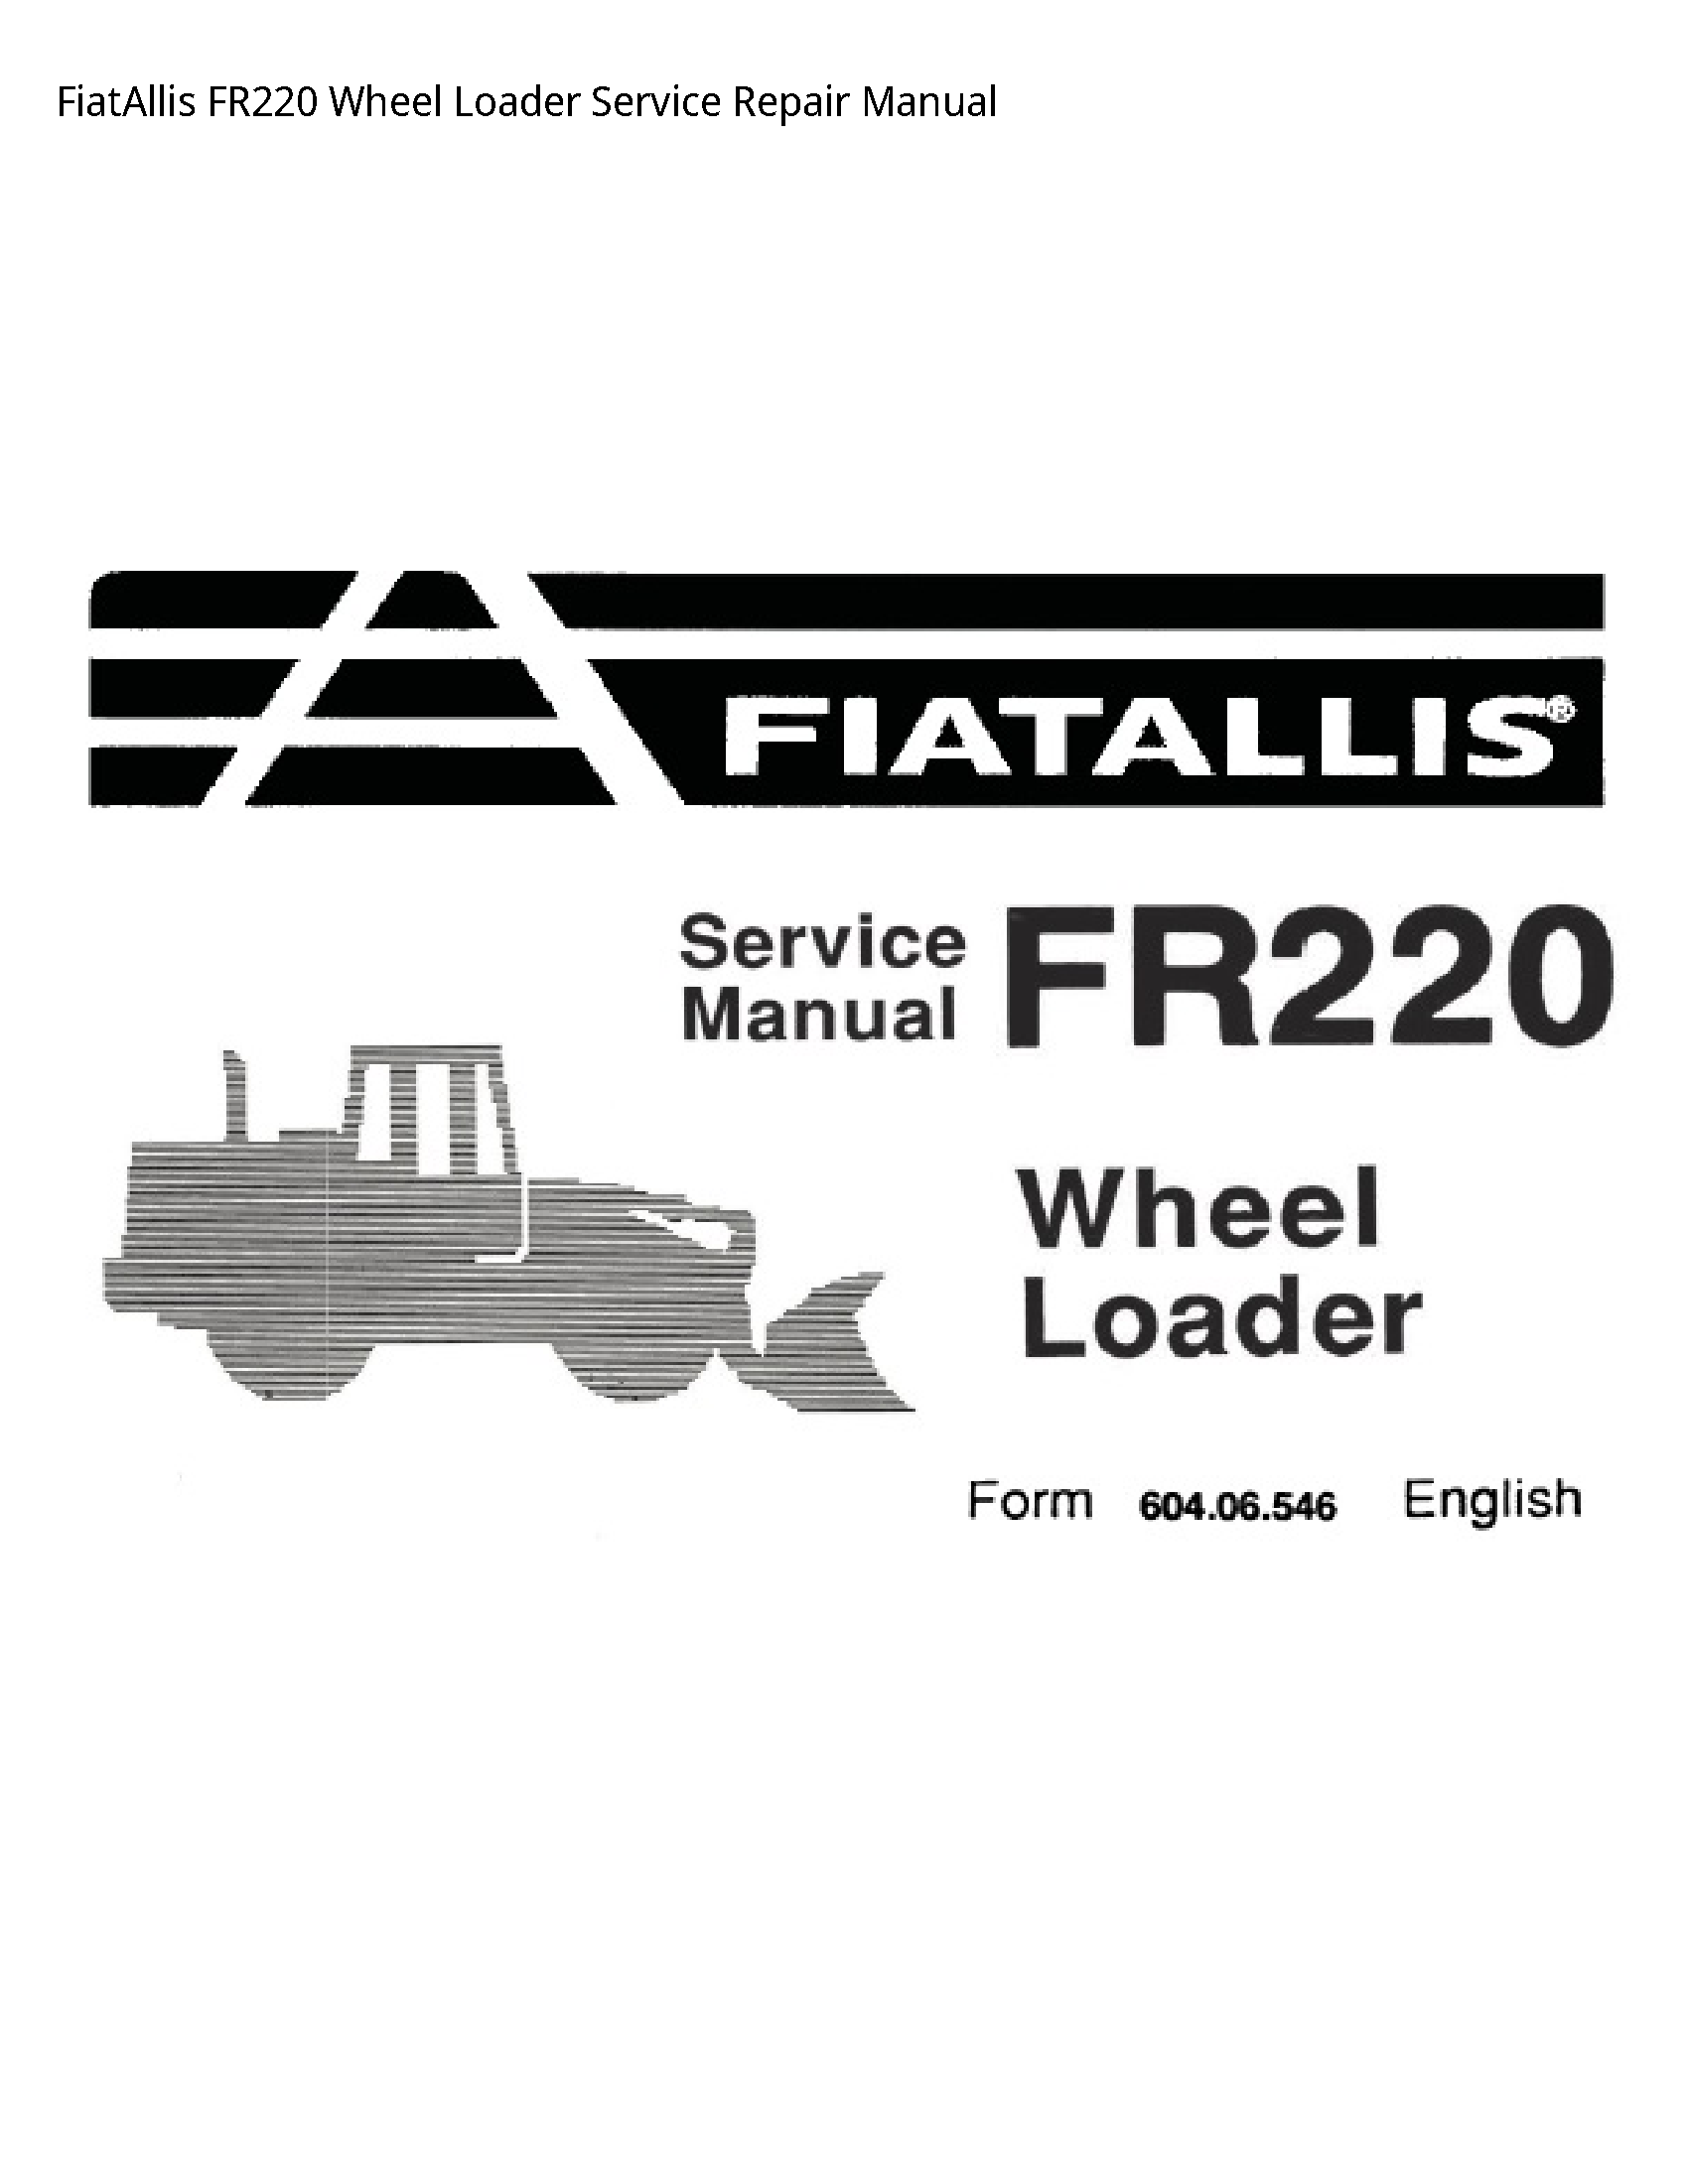 Fiatallis FR220 Wheel Loader manual